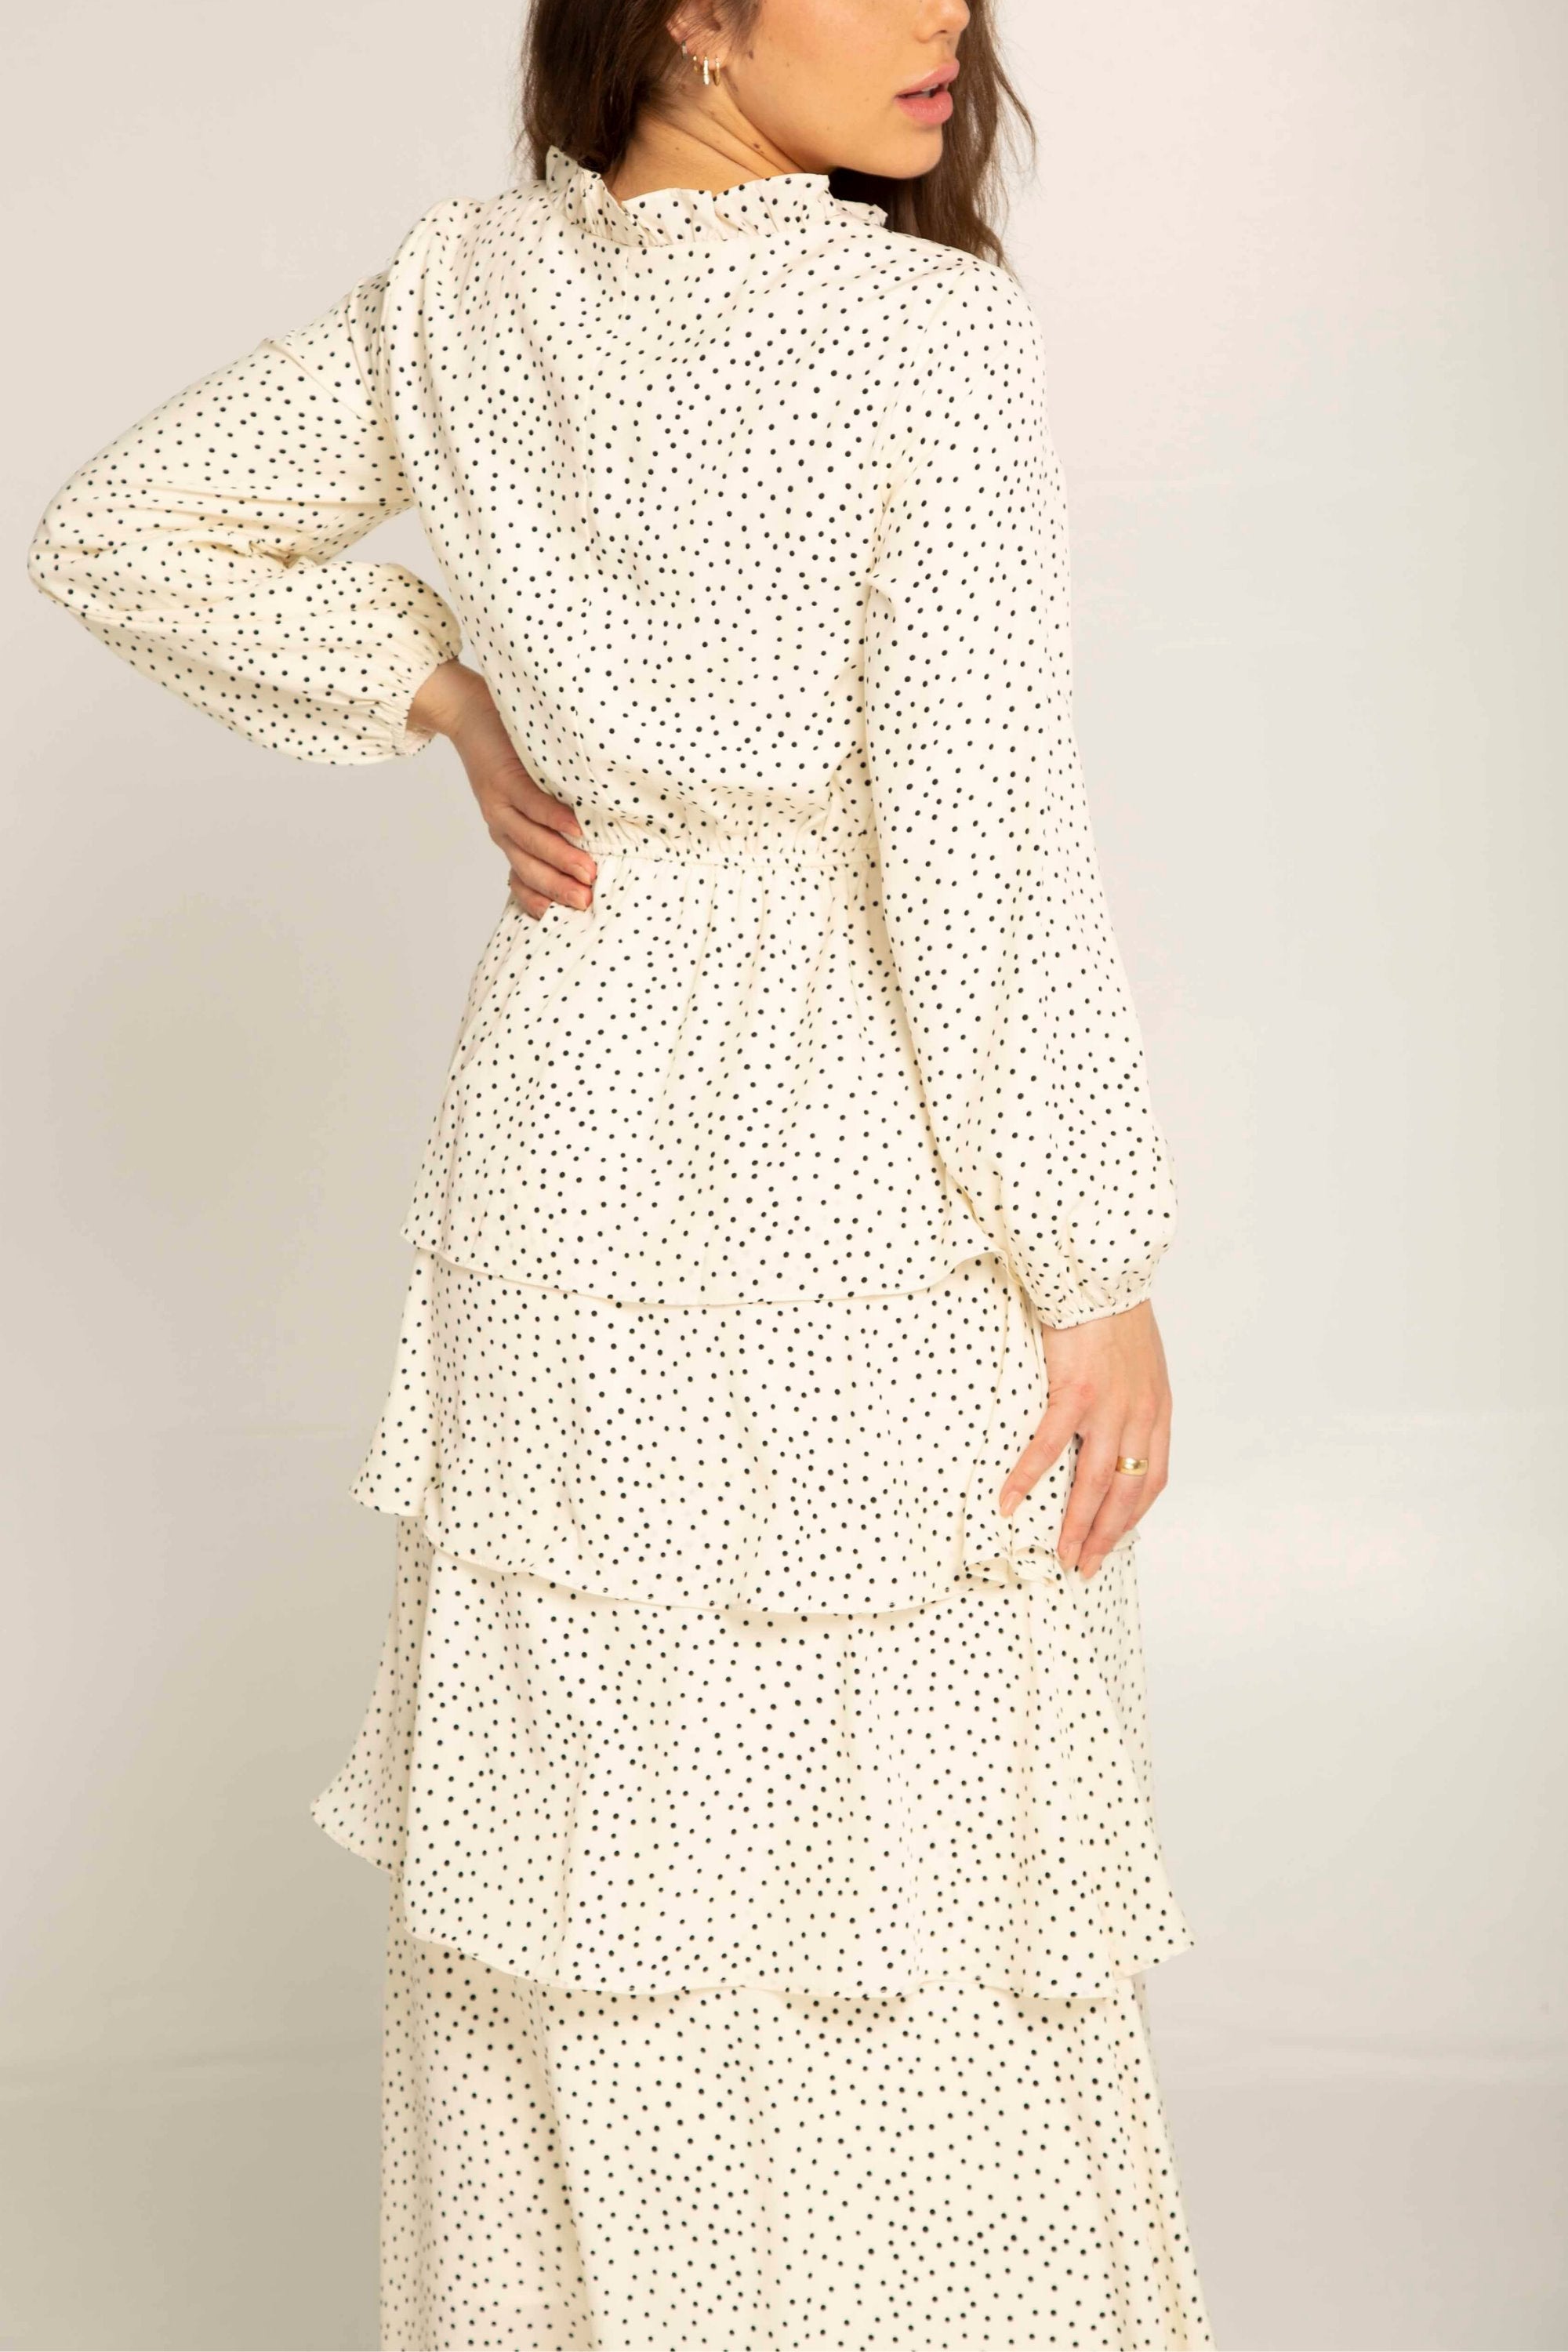 white polka dot ruffle dress